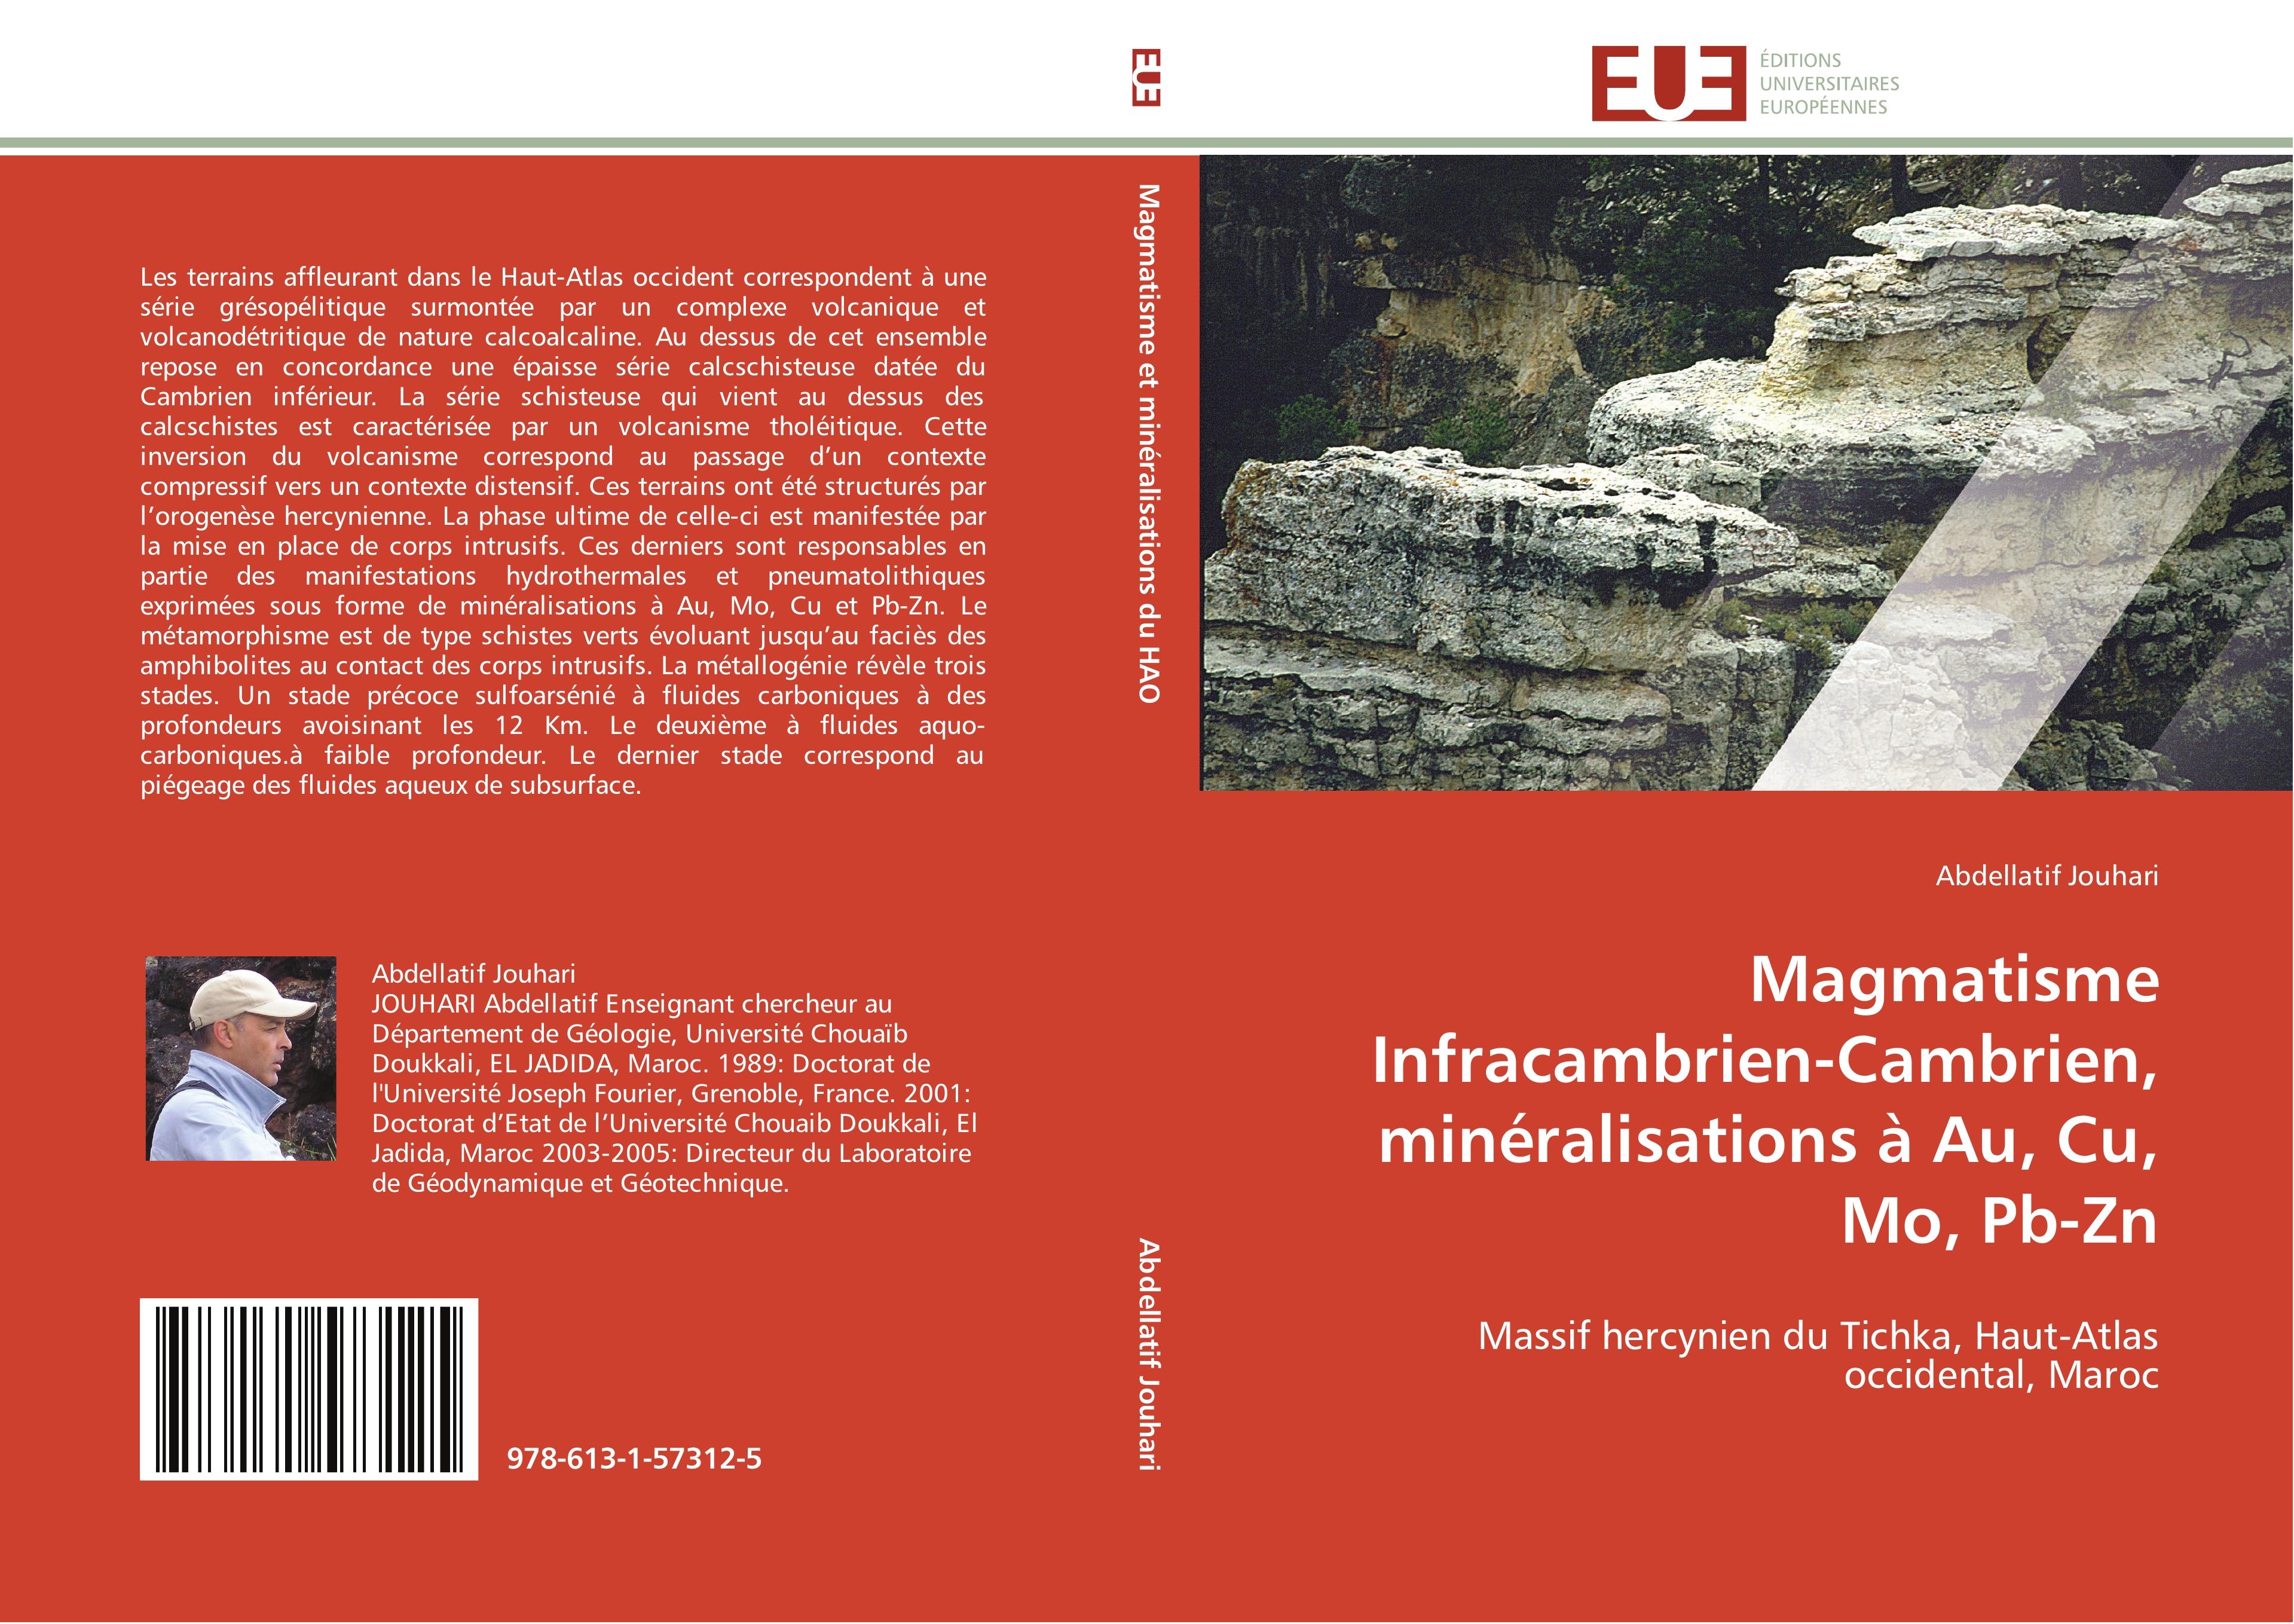 Magmatisme Infracambrien-Cambrien, minéralisations à Au, Cu, Mo, Pb-Zn - Abdellatif Jouhari